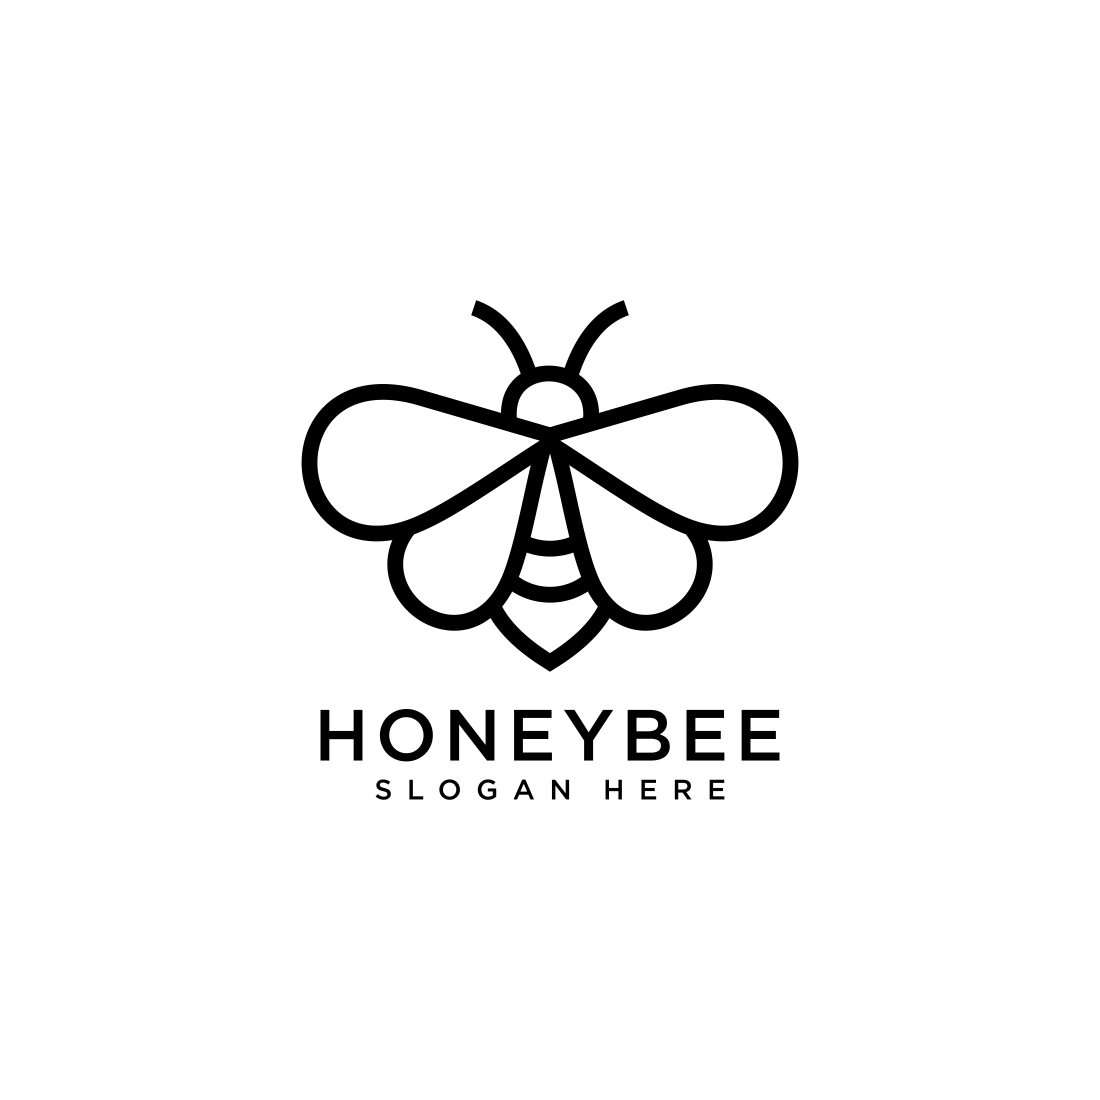 honey bee animal logo cover image.